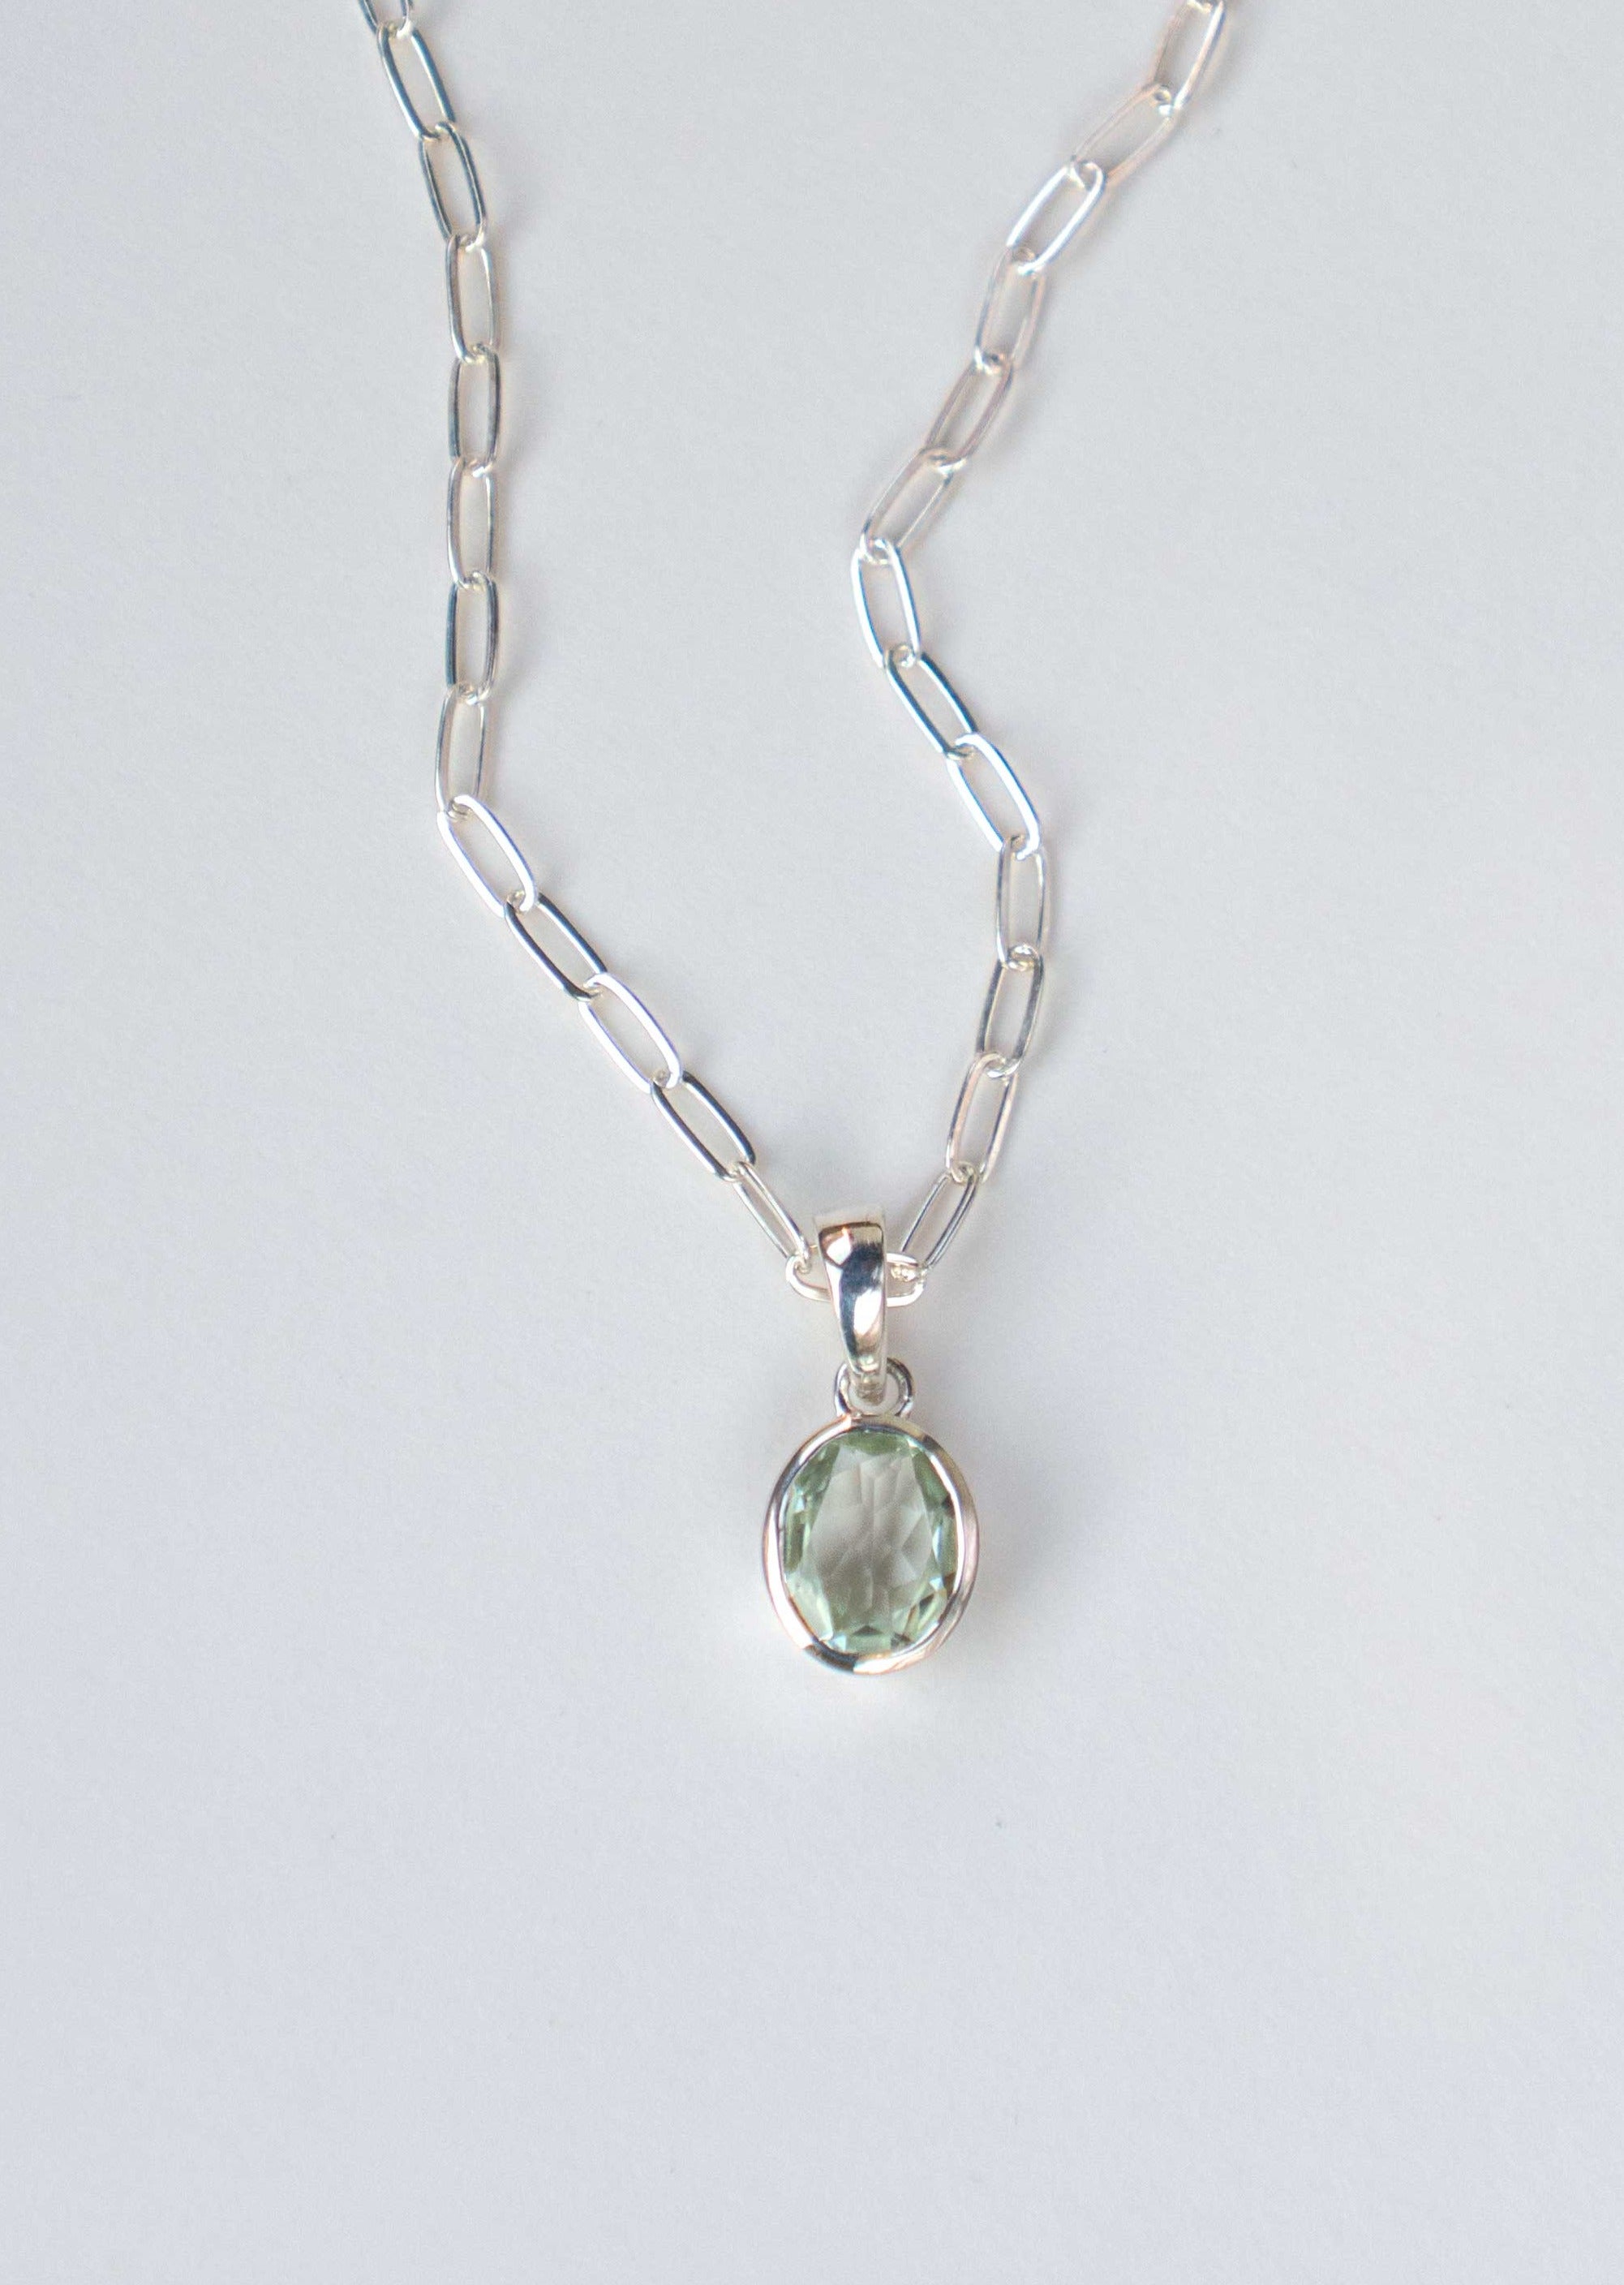 Green Amethyst Sterling Silver Necklace February Birthstone Gemstone Gifts for Girls Women Anniversary birthday